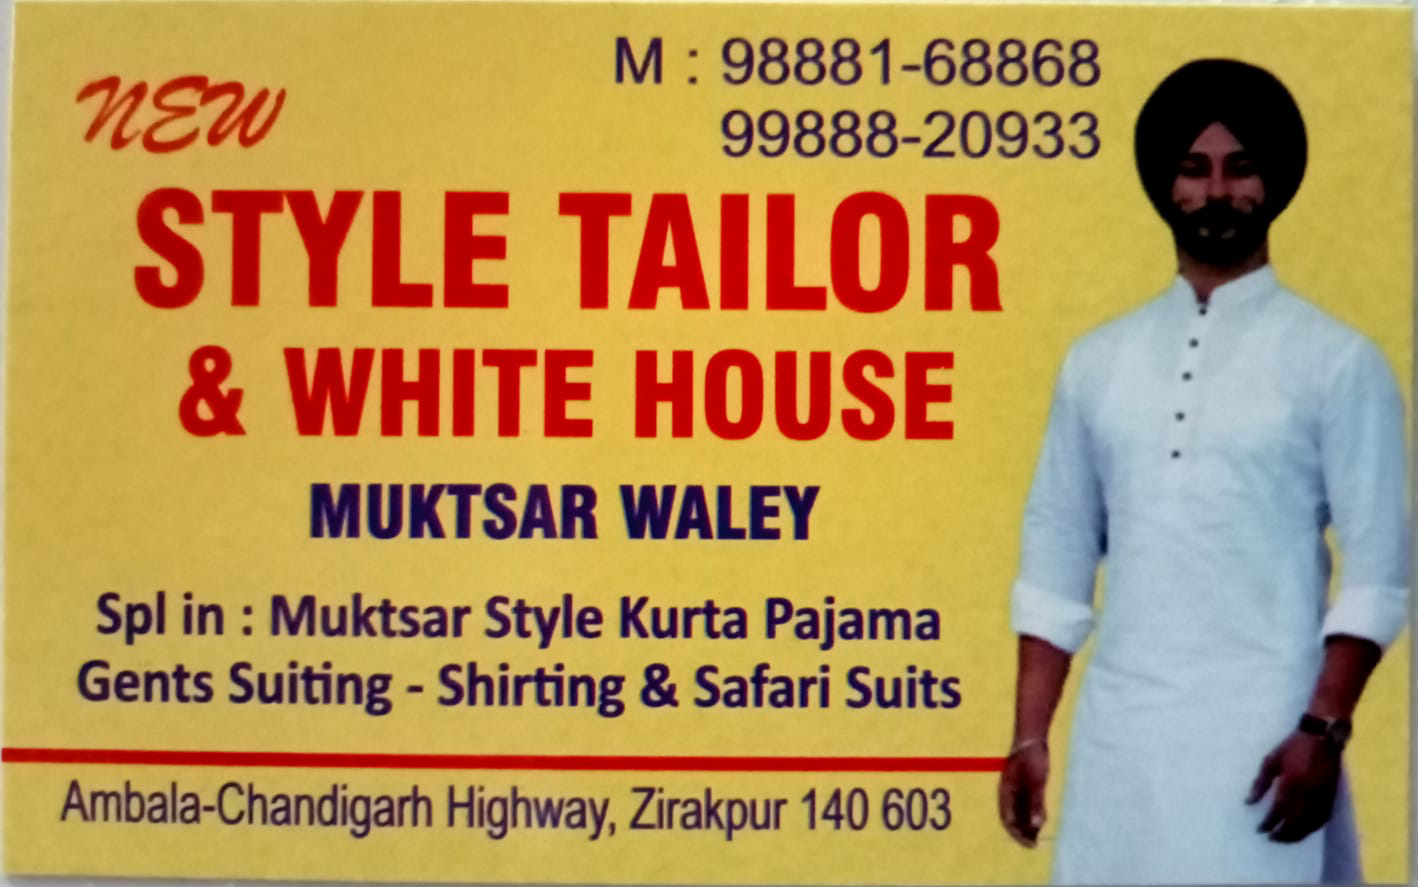 New Style Tailor Muktsar Waley